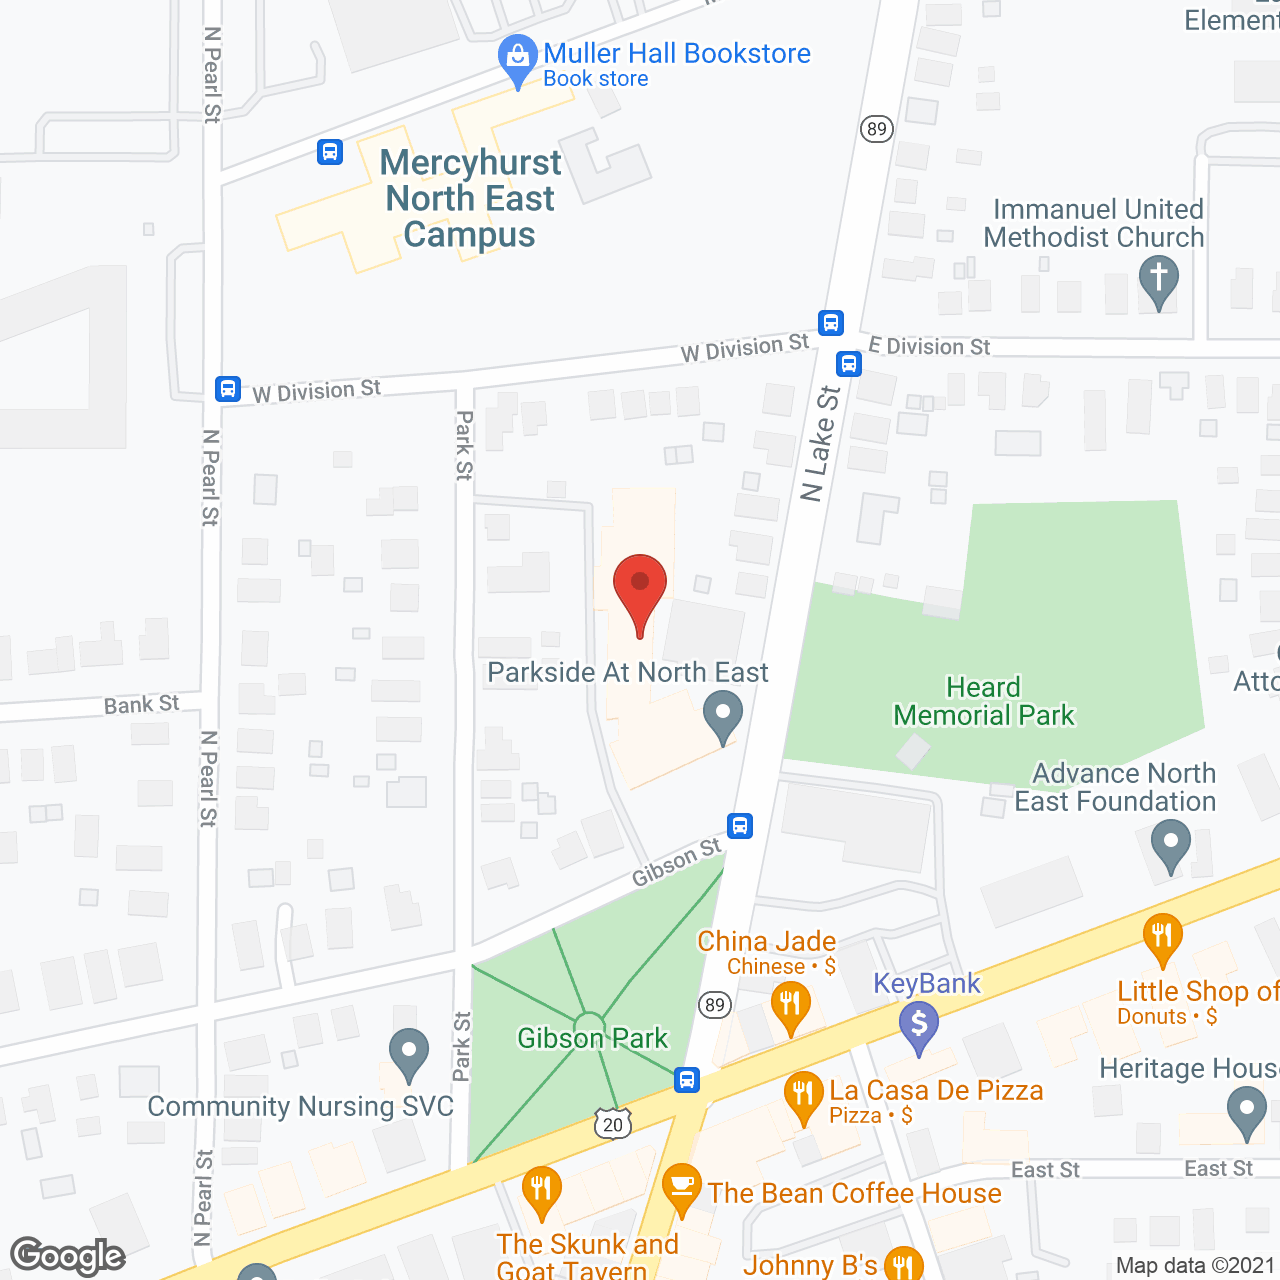 Parkside North East in google map